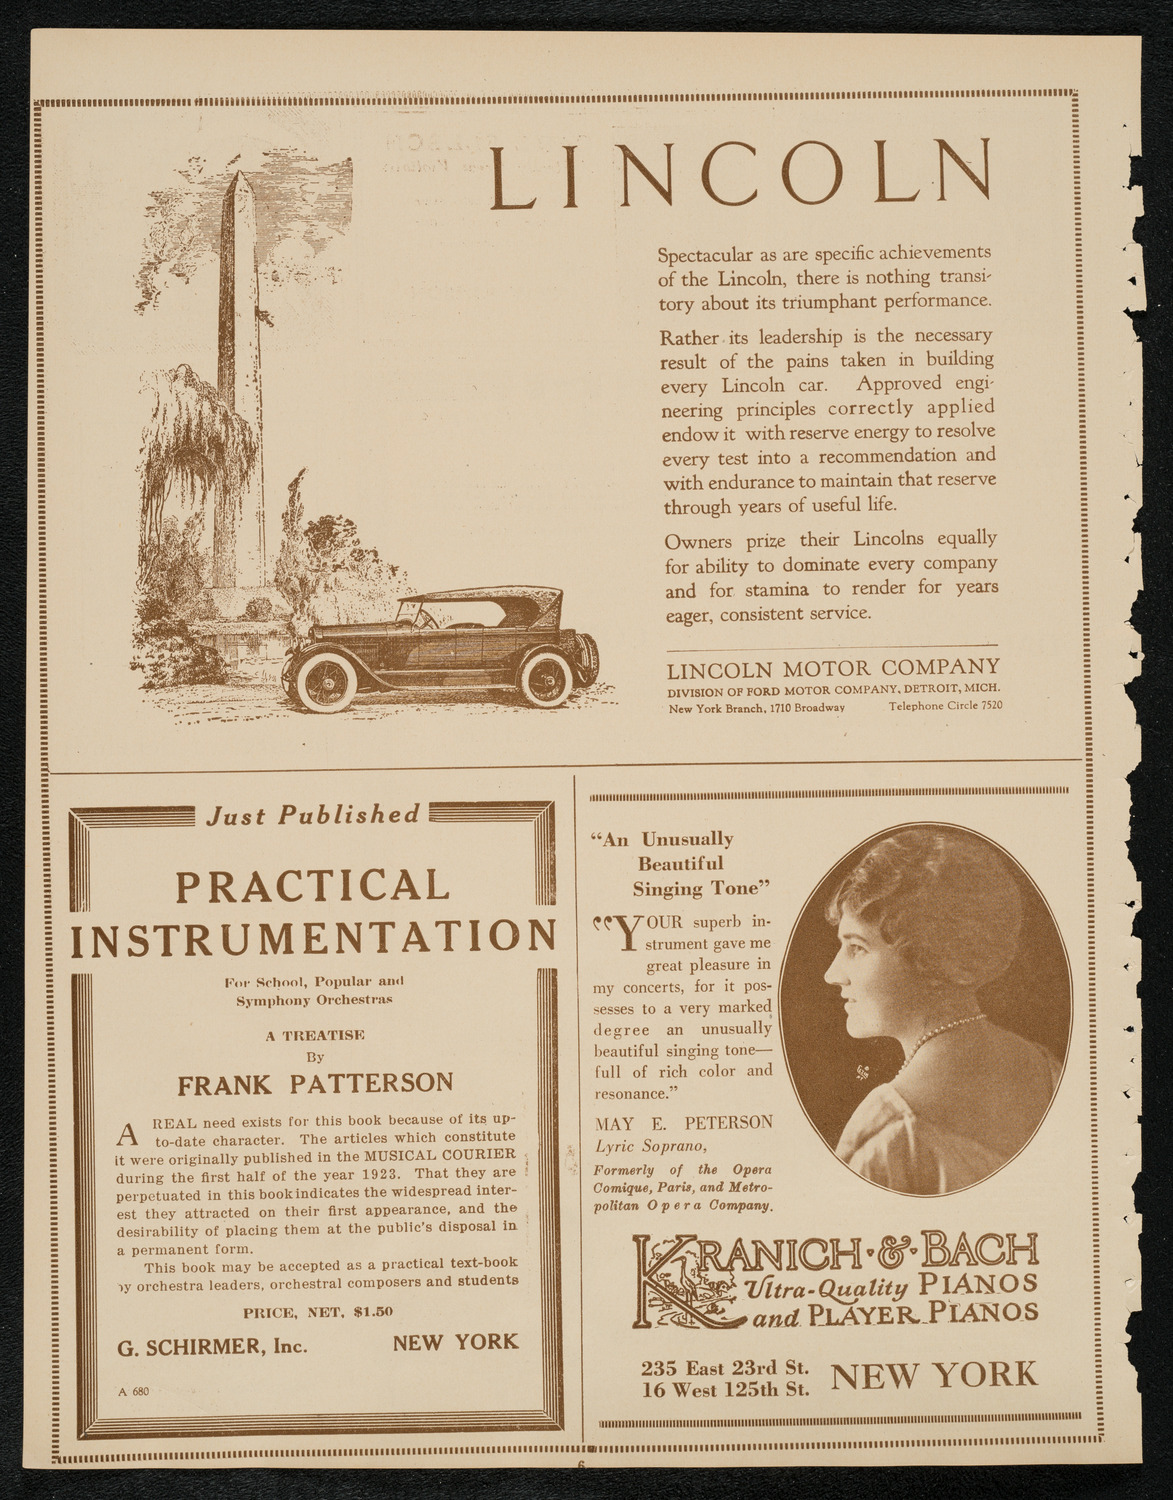 New York Symphony Club, April 18, 1924, program page 6